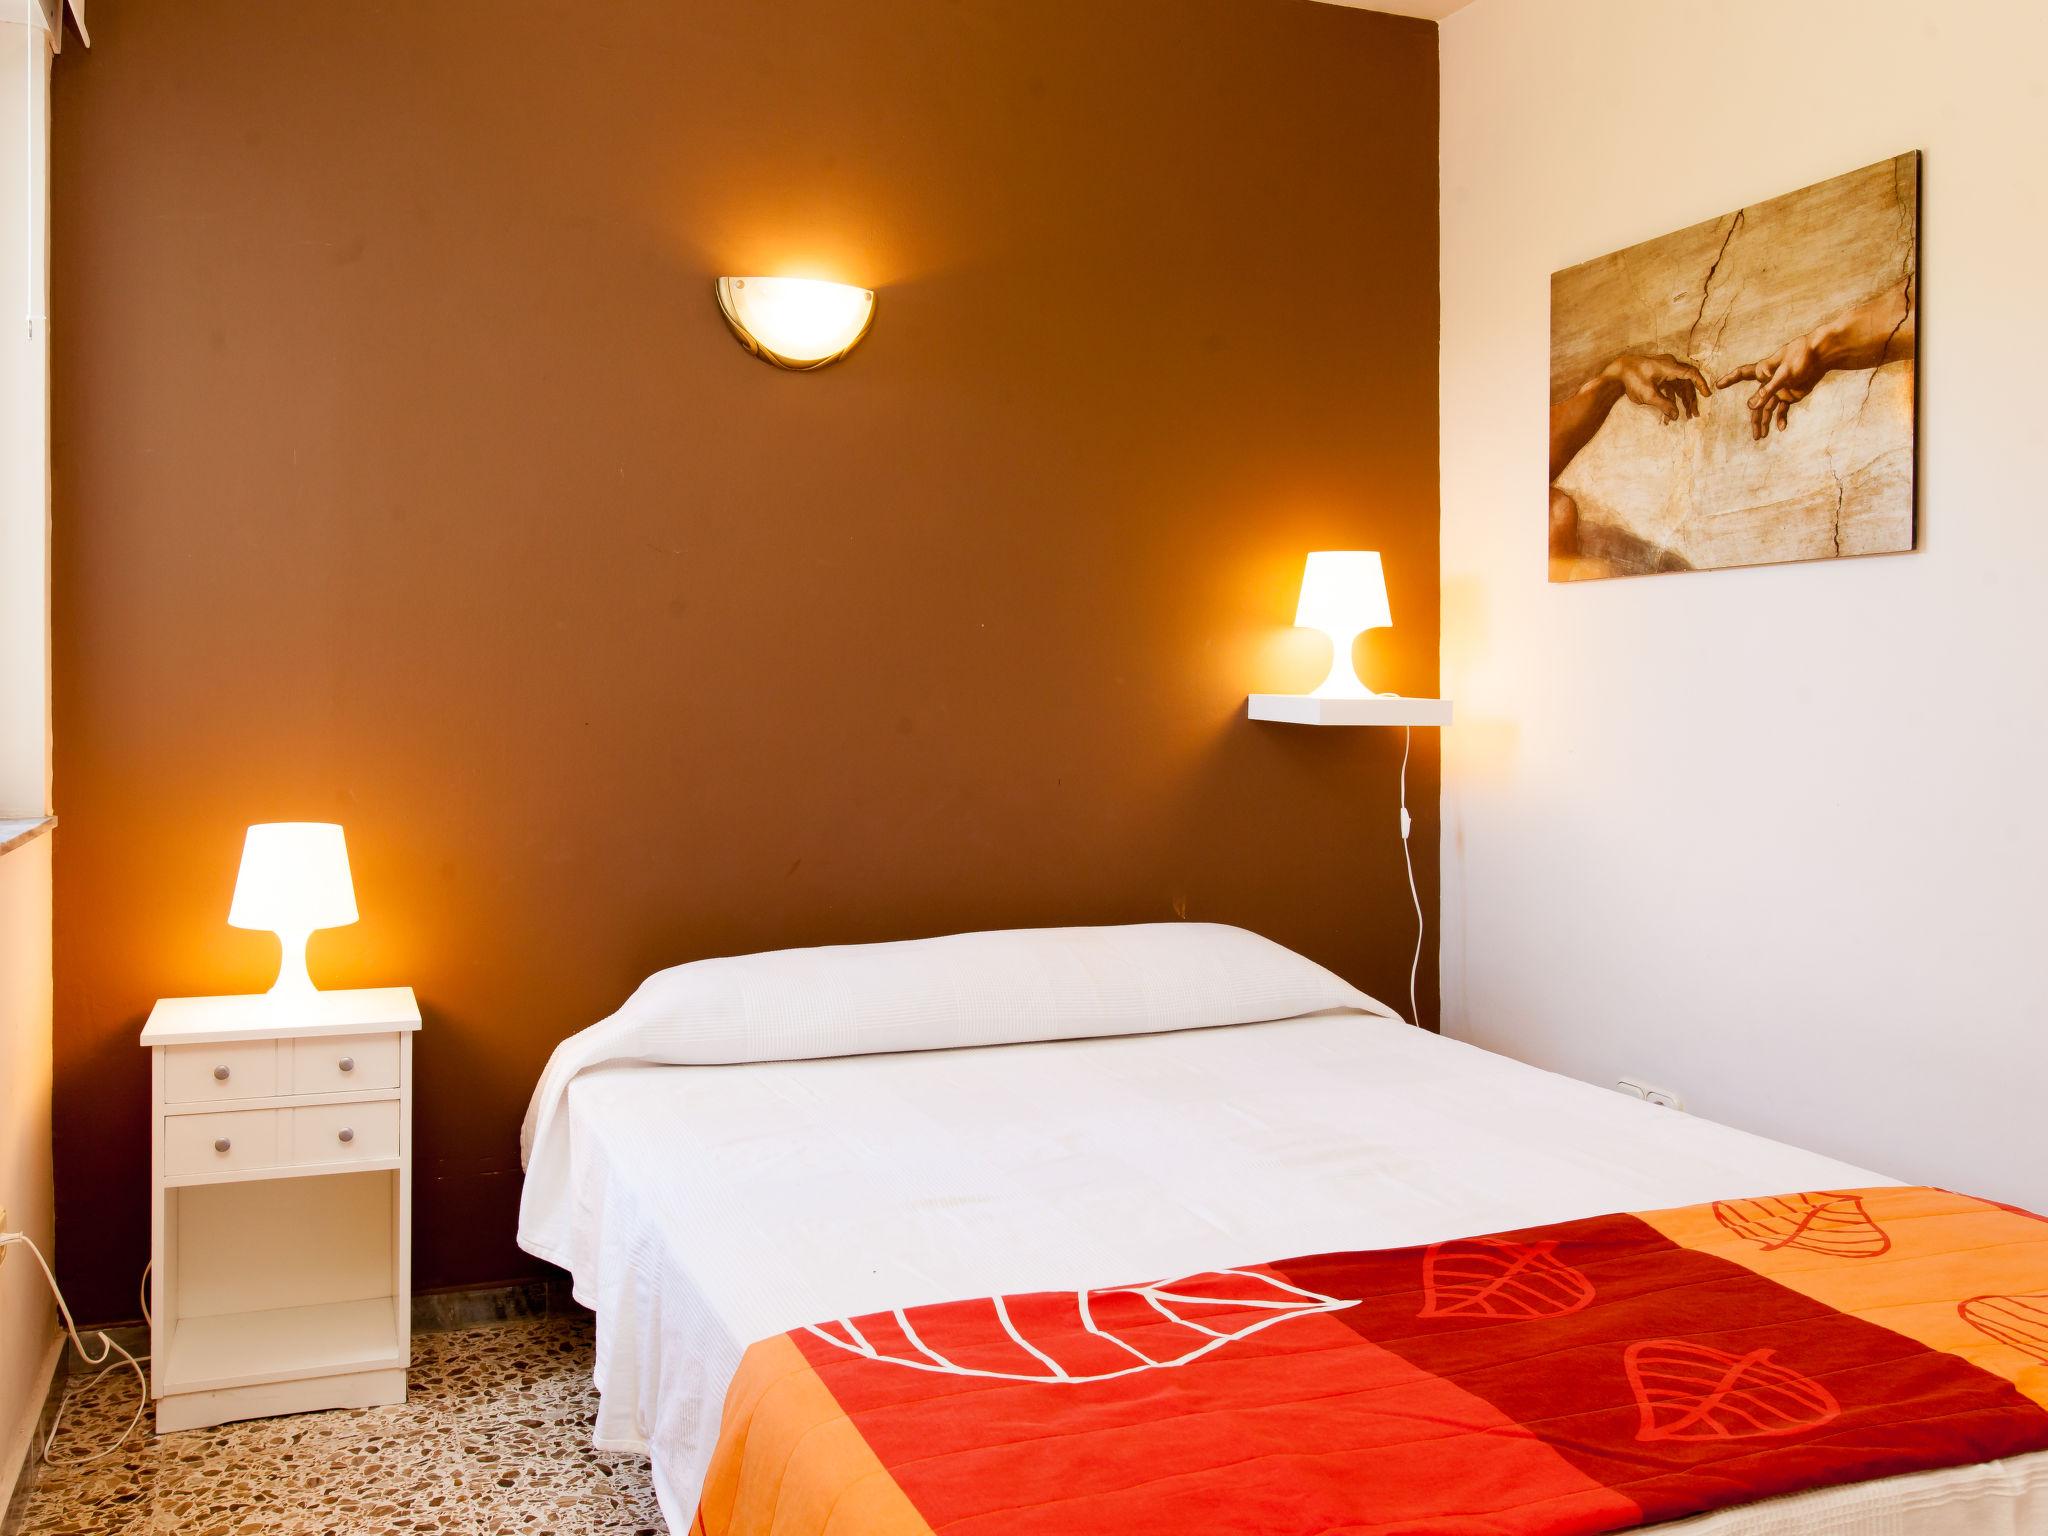 Foto 10 - Casa con 4 camere da letto a Vélez-Málaga con piscina privata e vista mare